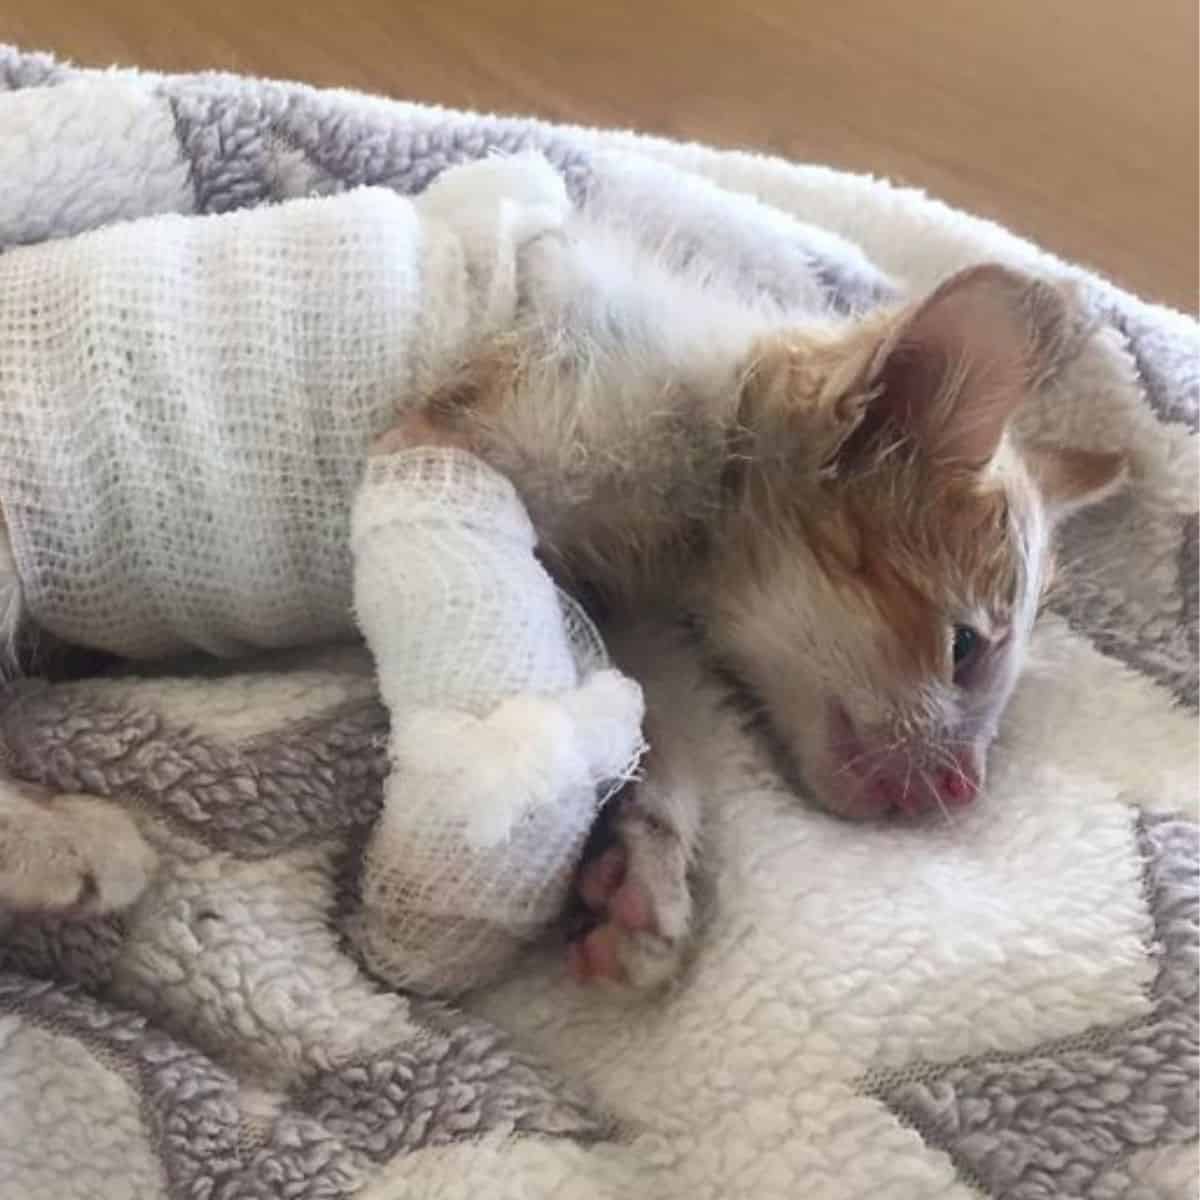 the injured kitten lies down